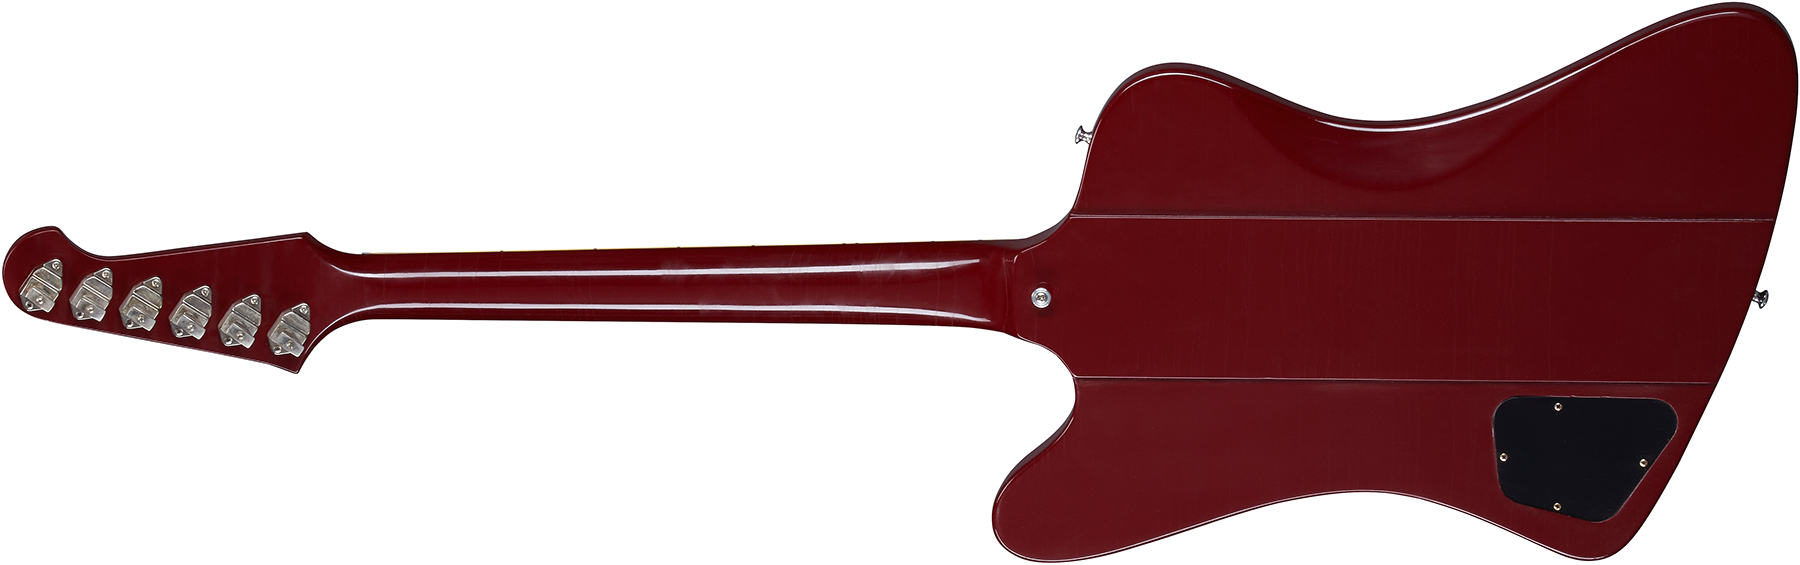 Gibson Custom Shop Murphy Lab Firebird 1963 Maestro Reissue Trem 2mh Rw - Light Aged Cardinal Red - Retro-rock elektrische gitaar - Variation 1